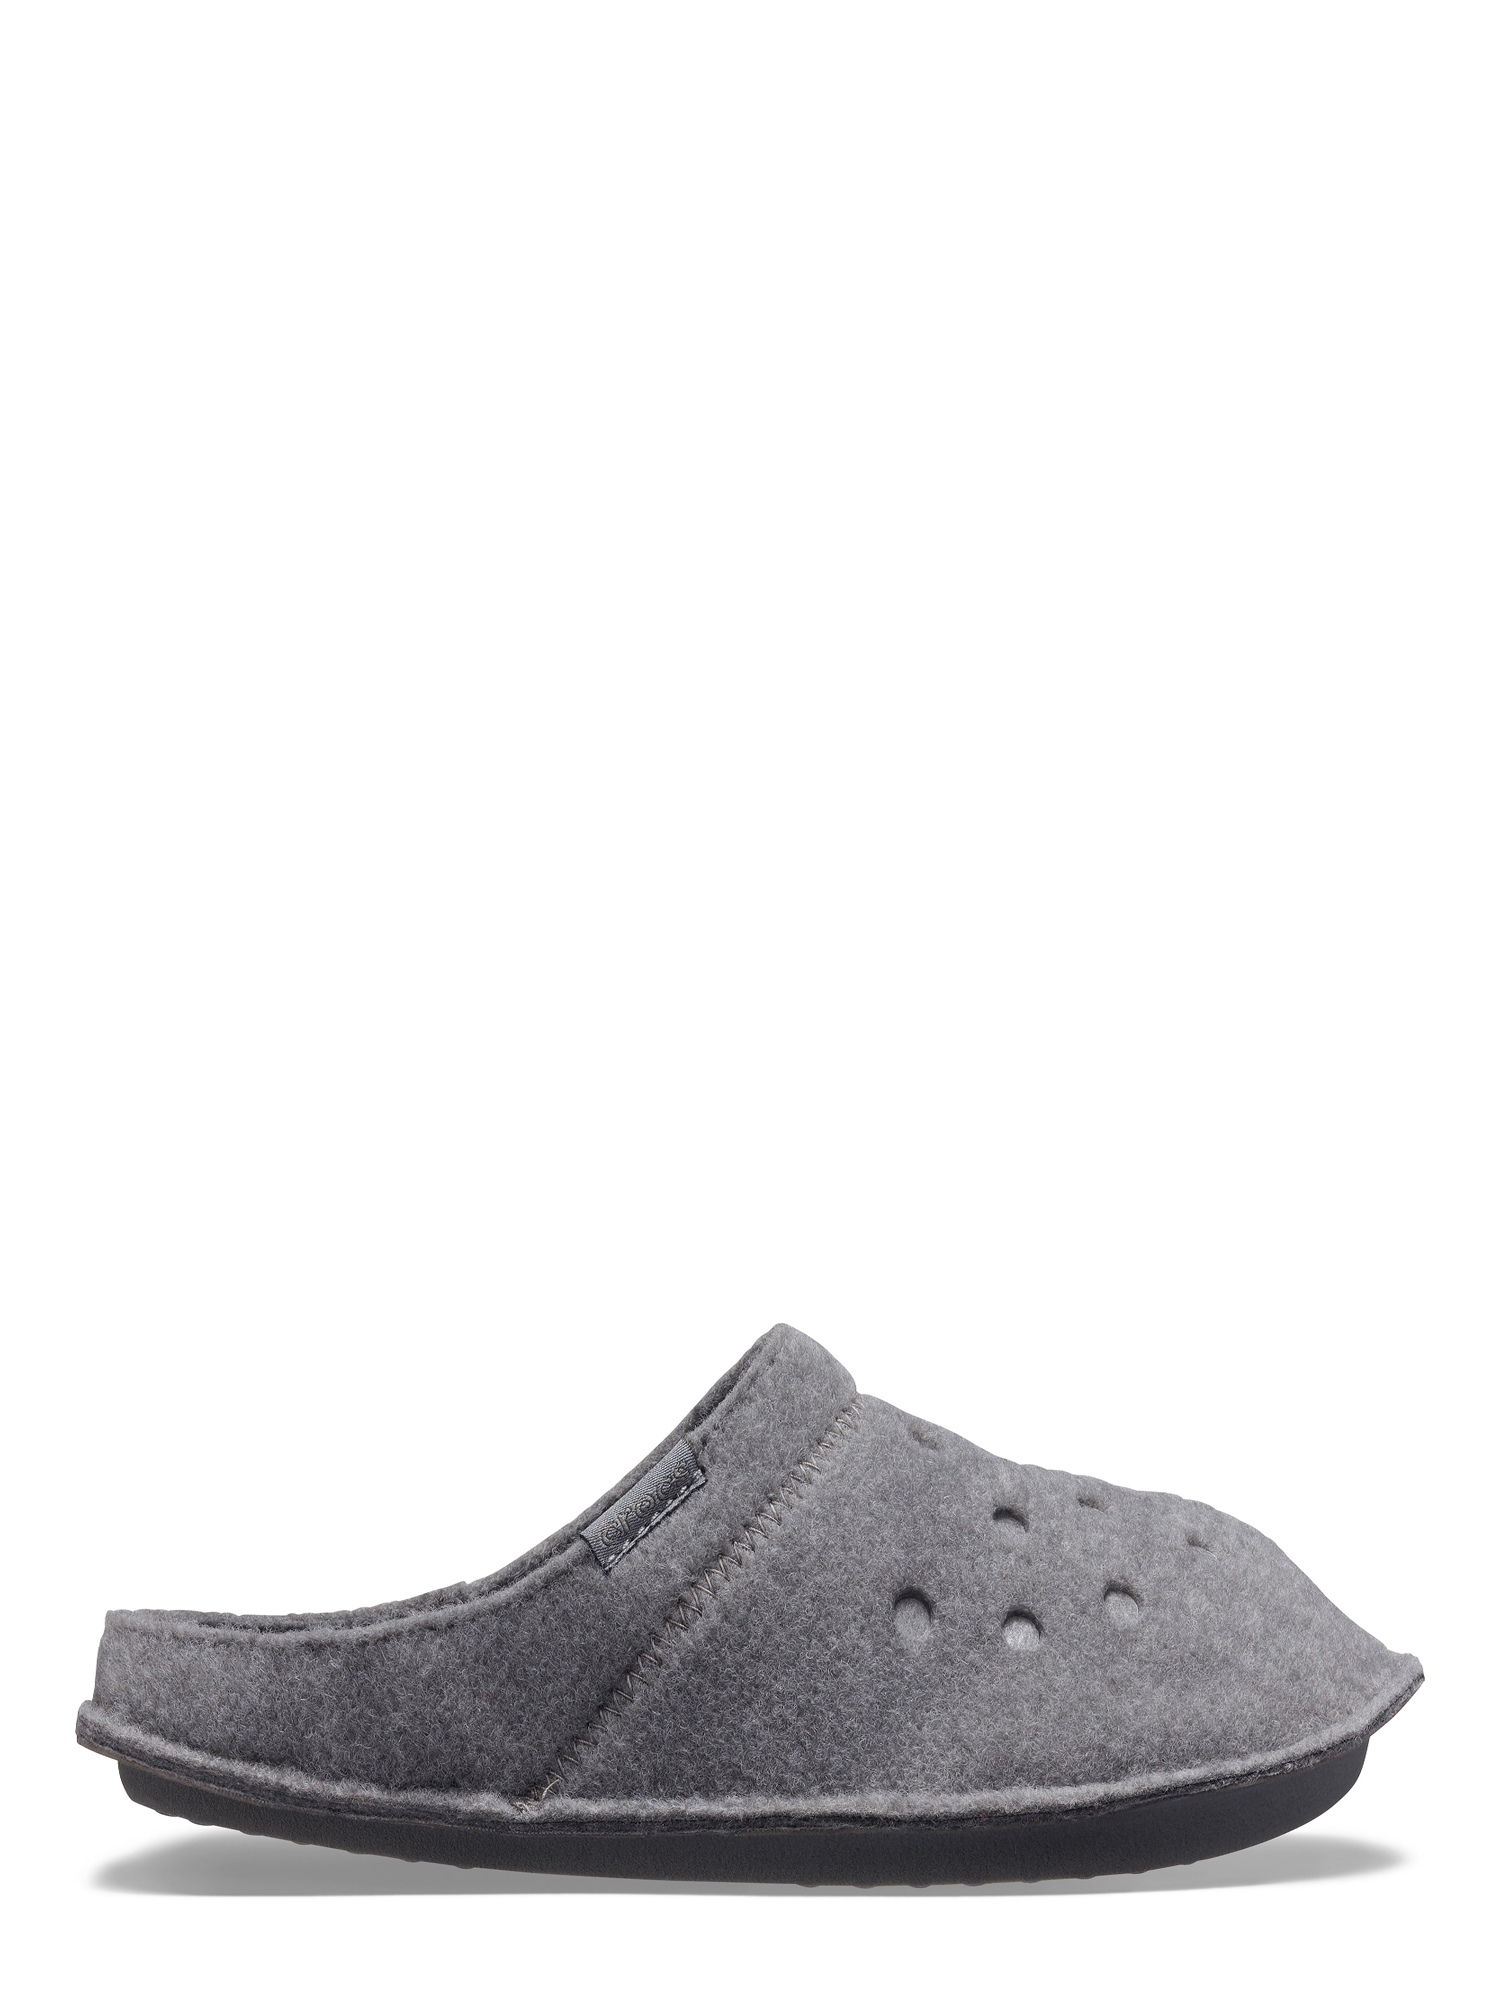 Crocs Unisex Classic Comfort Slippers - image 2 of 9